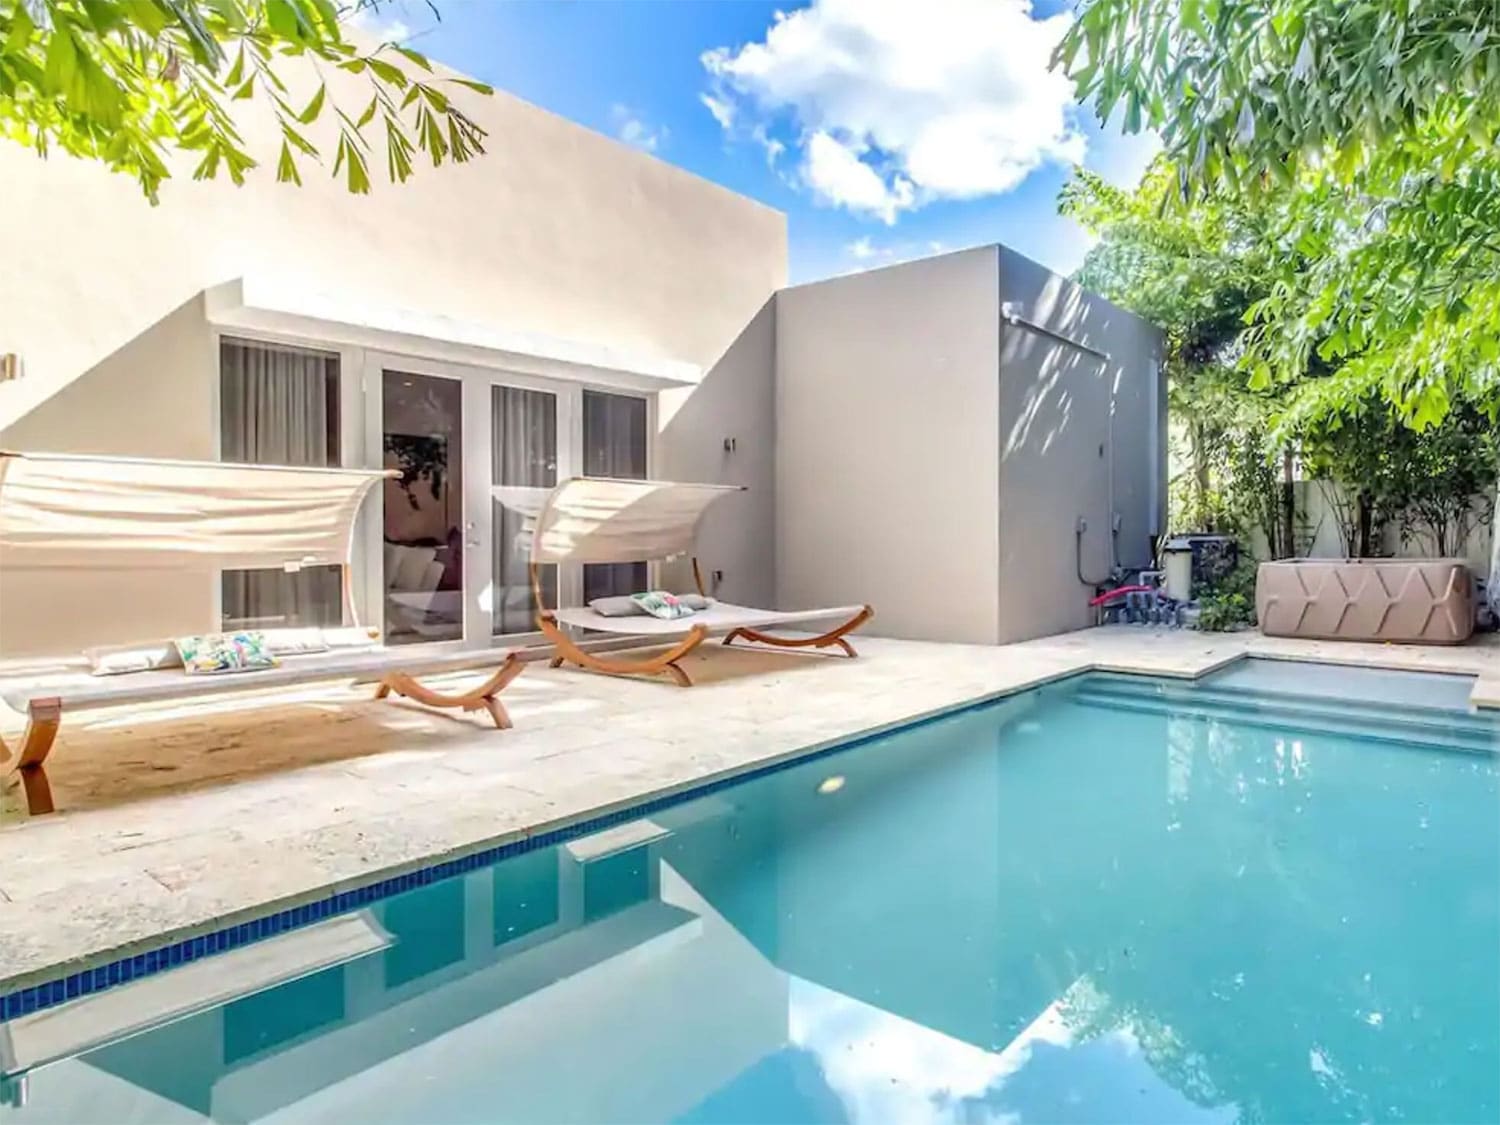 biscayne pool house airbnb